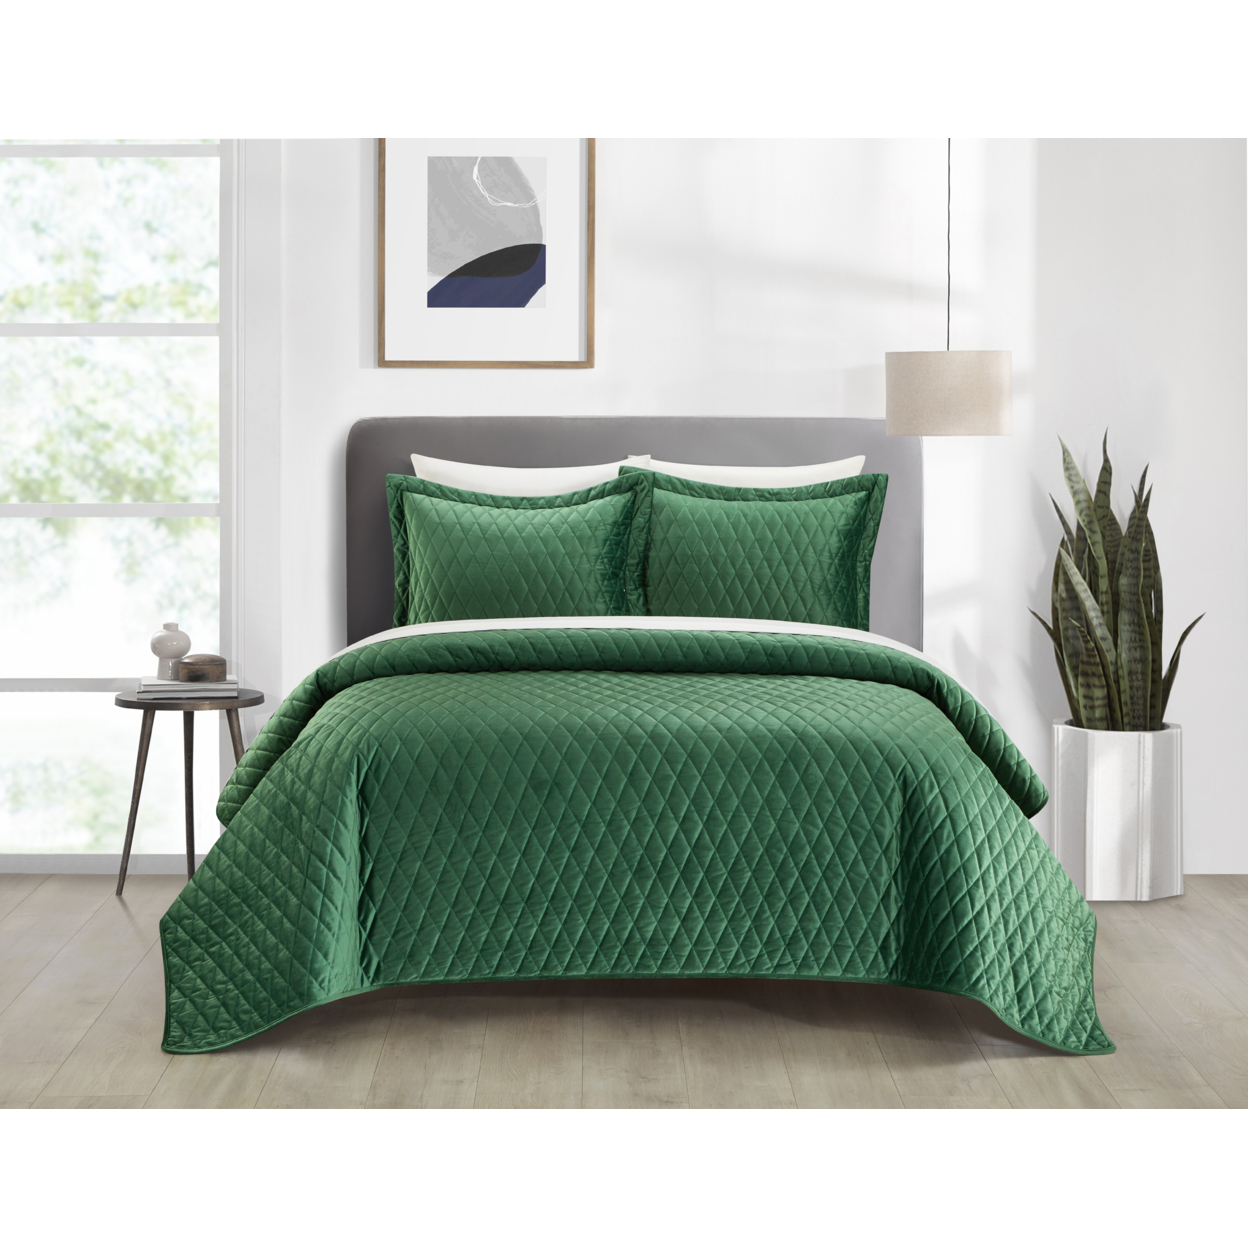 NY&C Home Dafa 3 Piece Velvet Quilt Set Diamond Stitched Pattern Bedding - Green, King